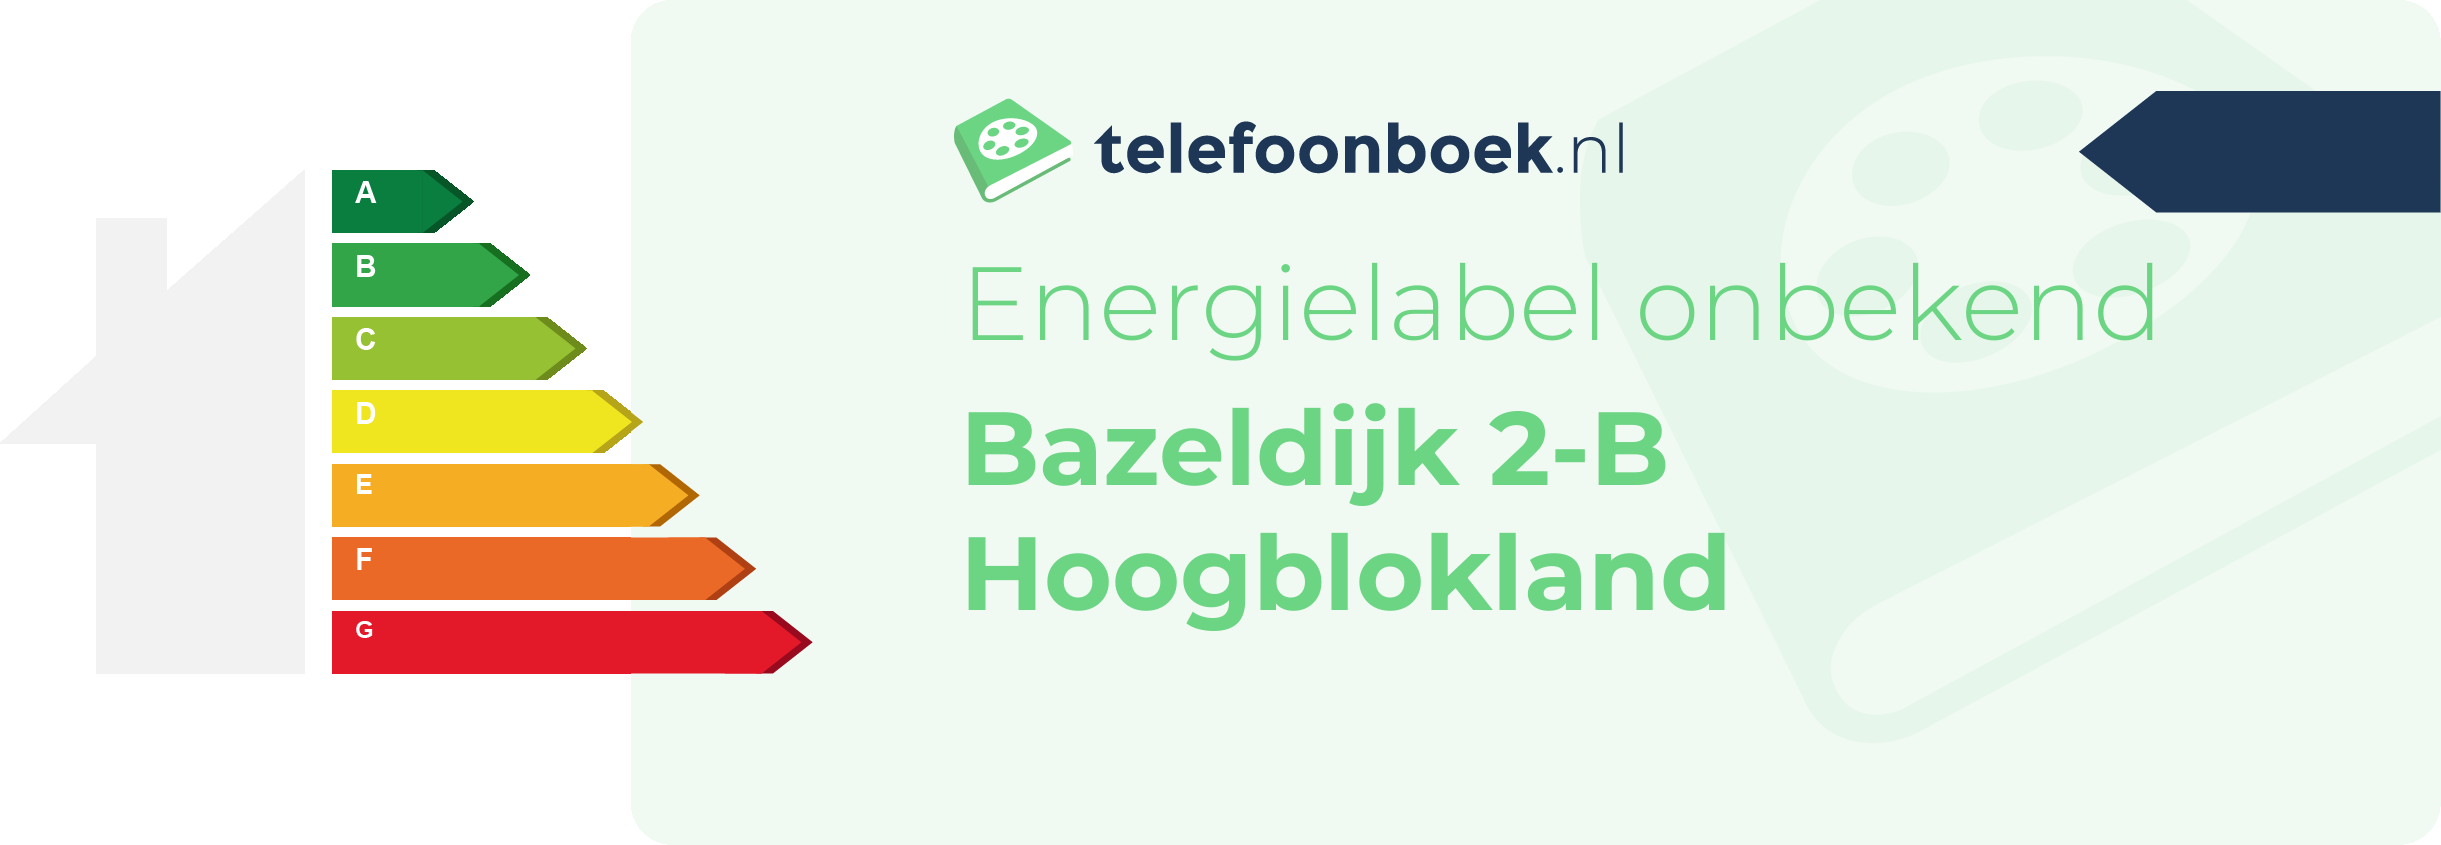 Energielabel Bazeldijk 2-B Hoogblokland